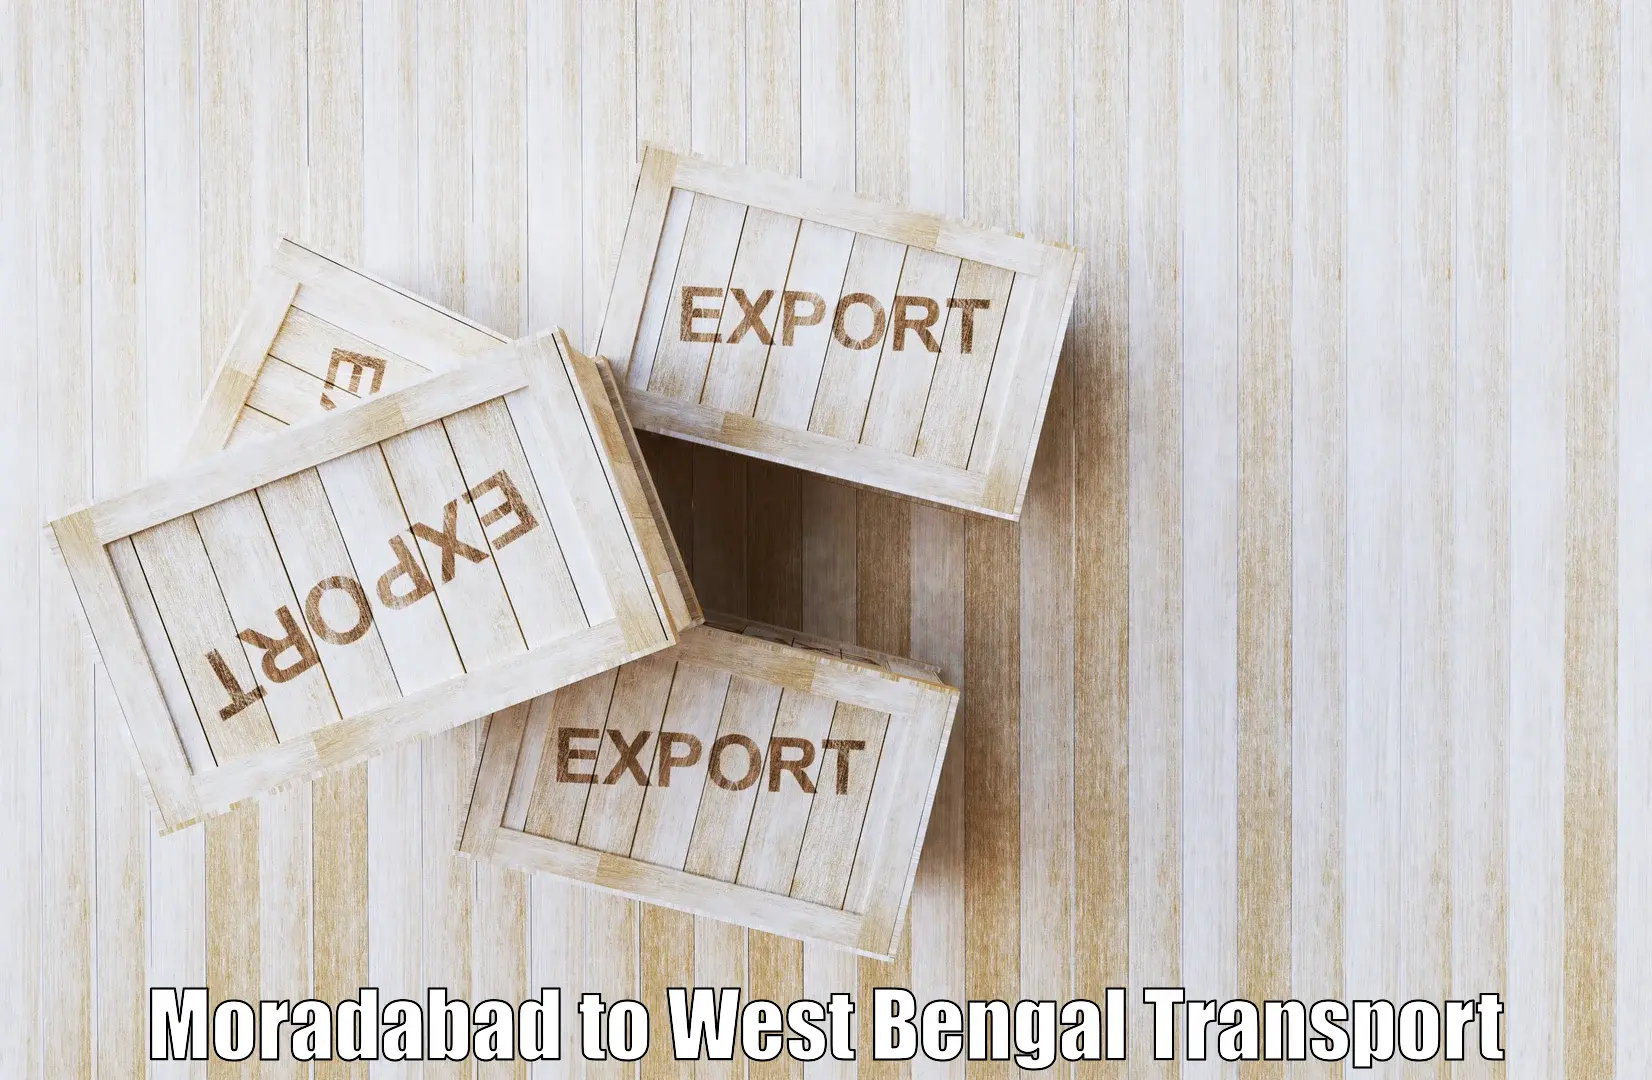 Express transport services in Moradabad to Bhagabati